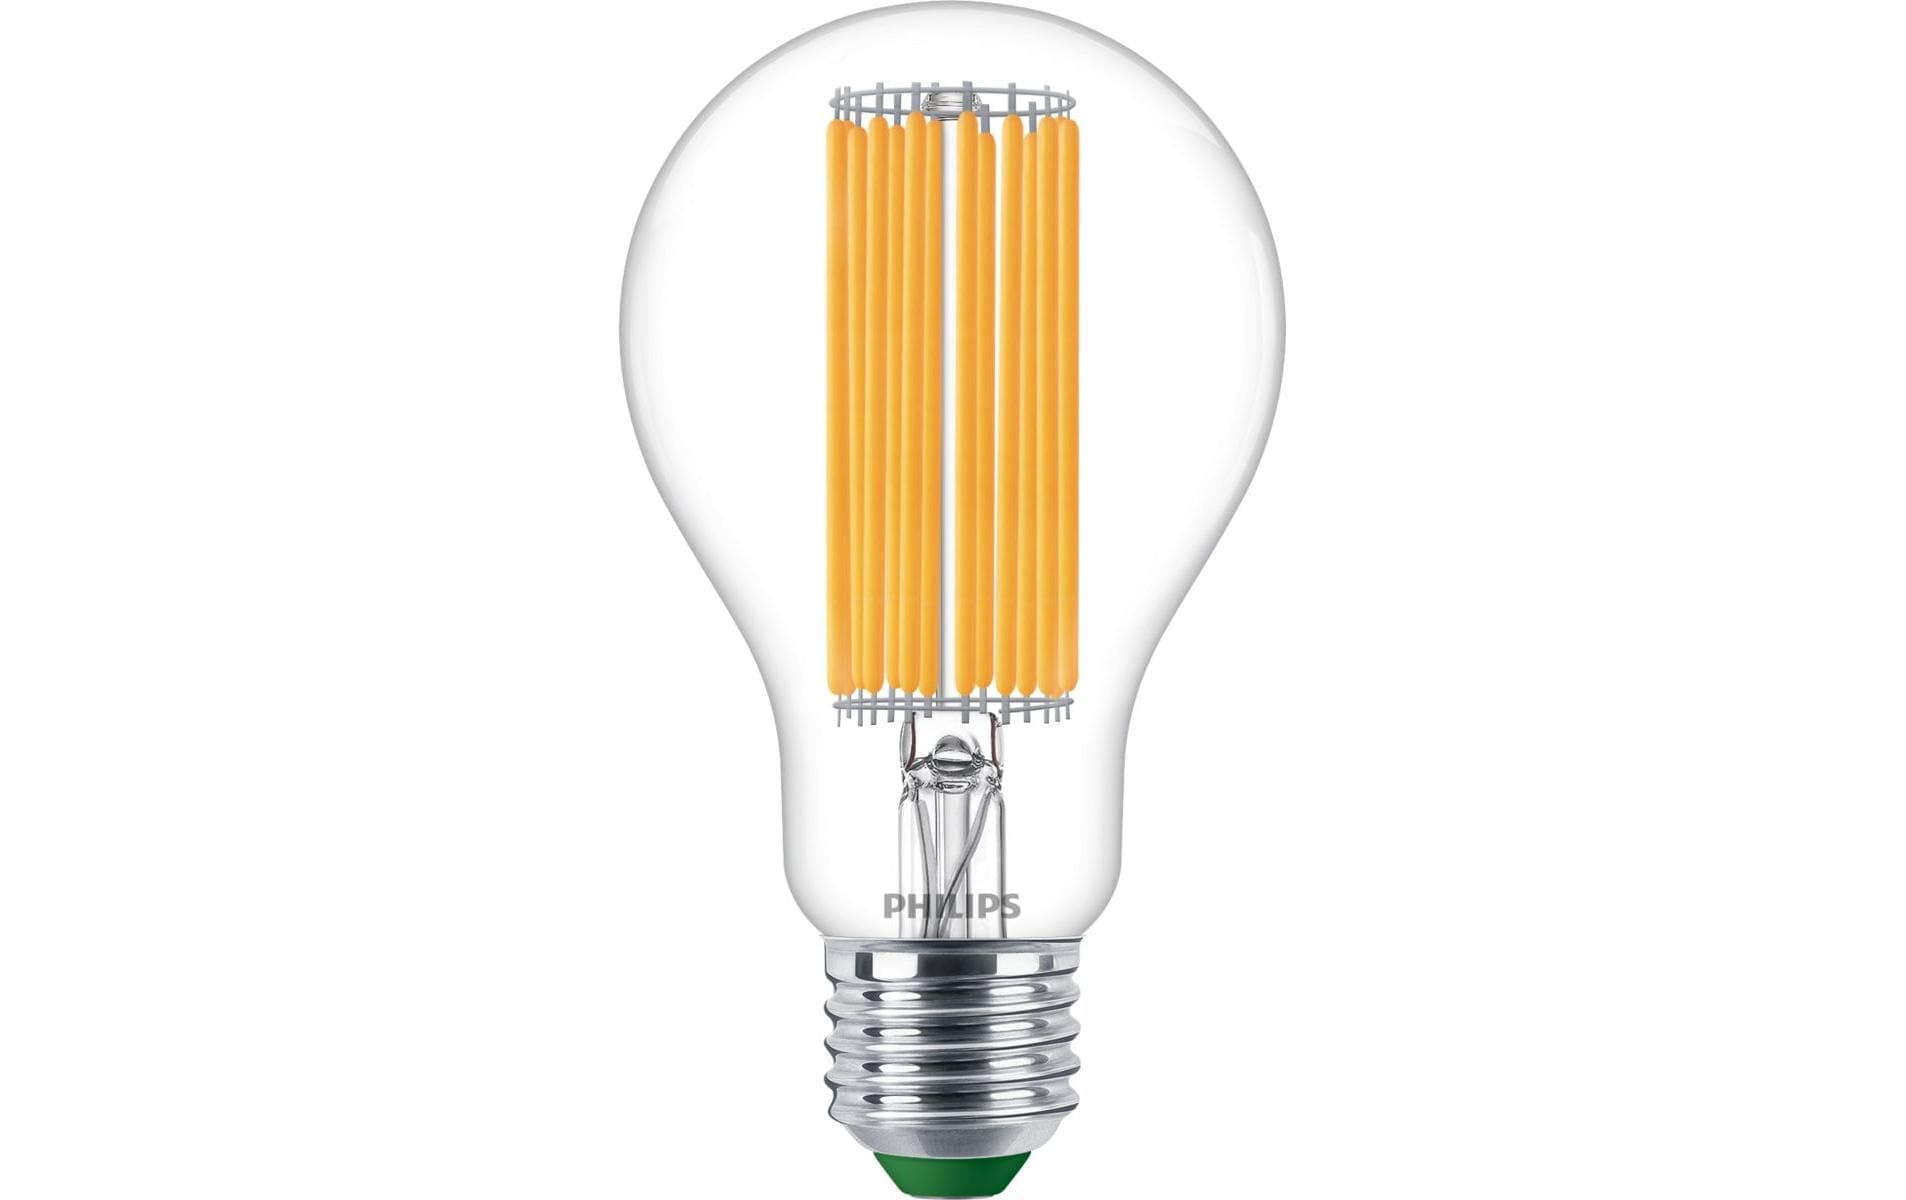 Philips LED-Leuchtmittel »Lampe MAS LEDB«, E27, Warmweiss von Philips